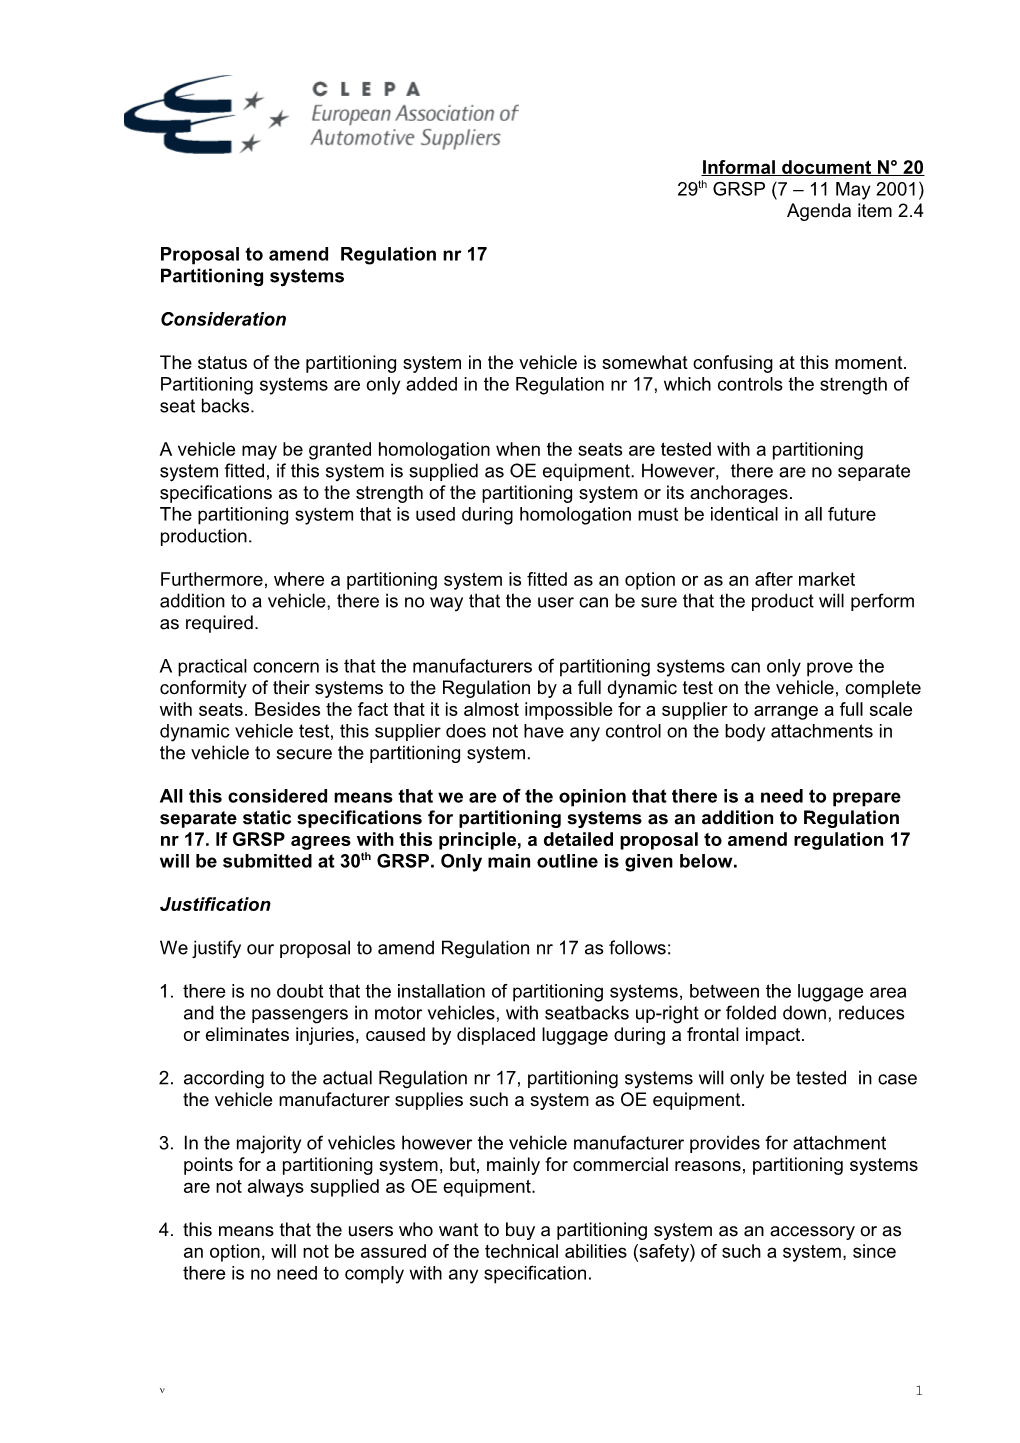 Proposal to Amend Regulation Nr 17